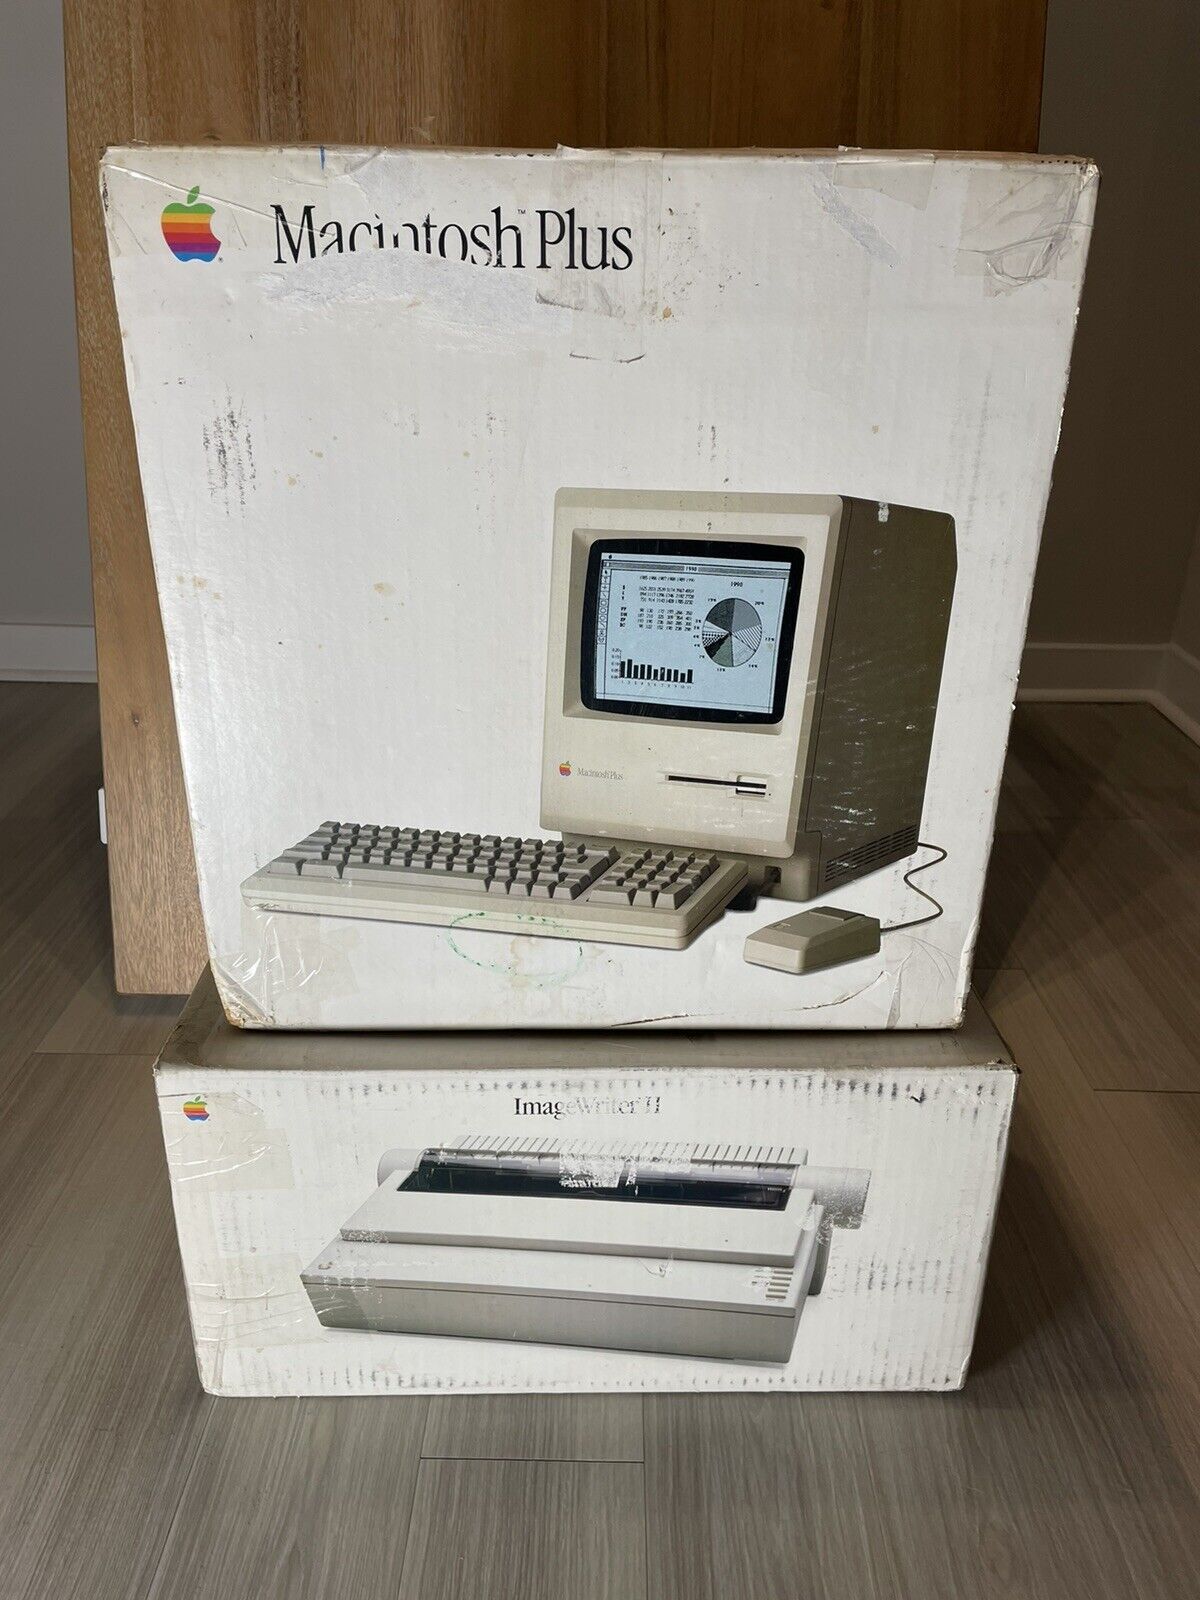 1986 Apple MacIntosh Plus Computer w/Apple Image Writer II Printer, KeyBoardEtc